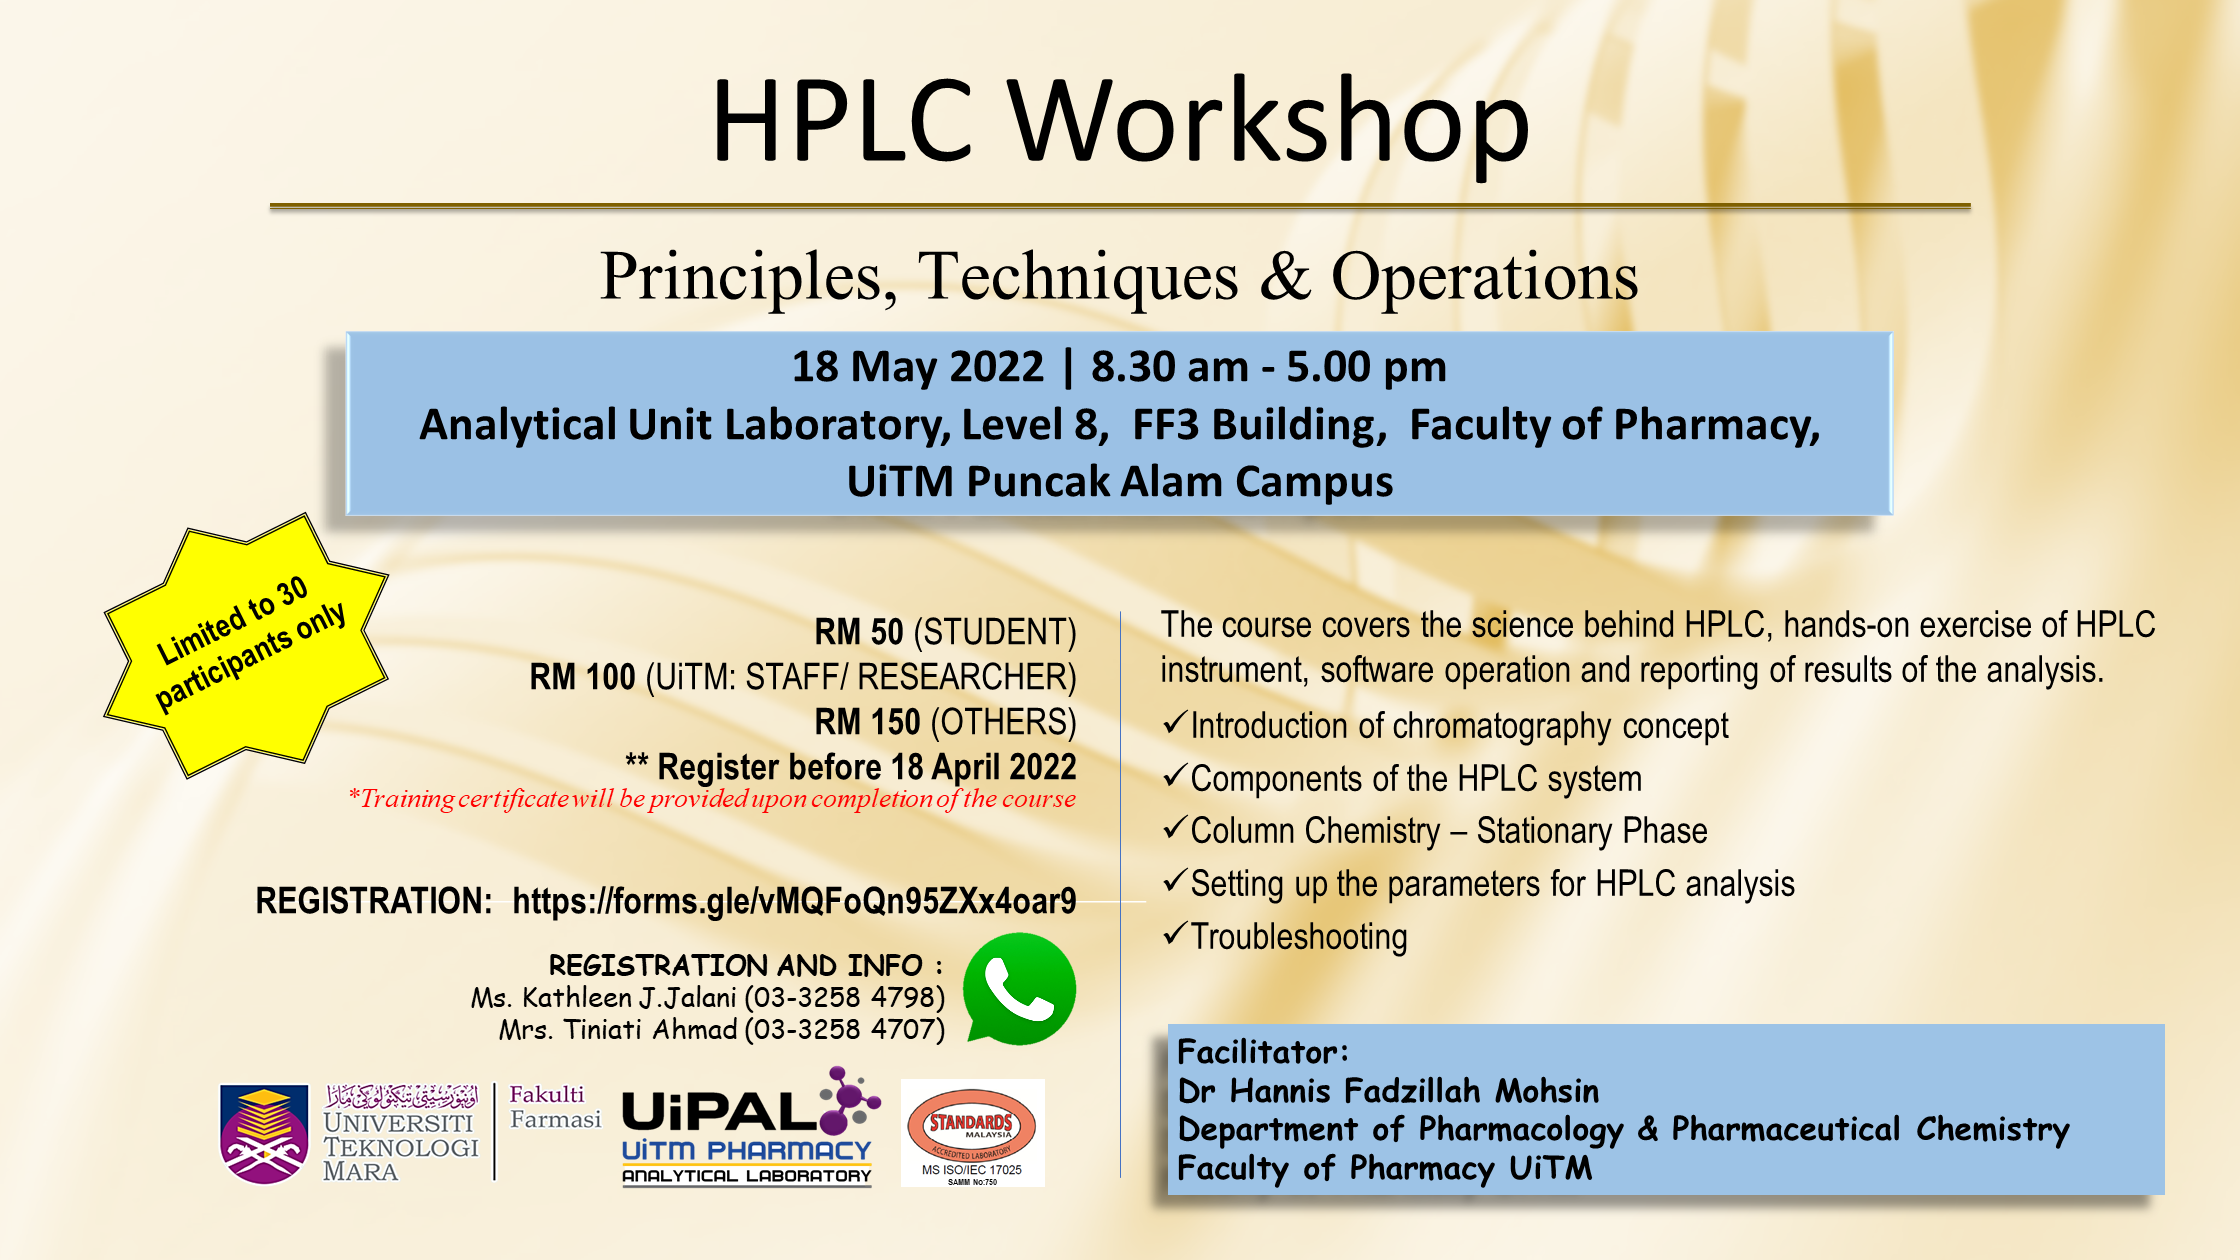 HPLC Workshop: Principles, Techniques & Operations